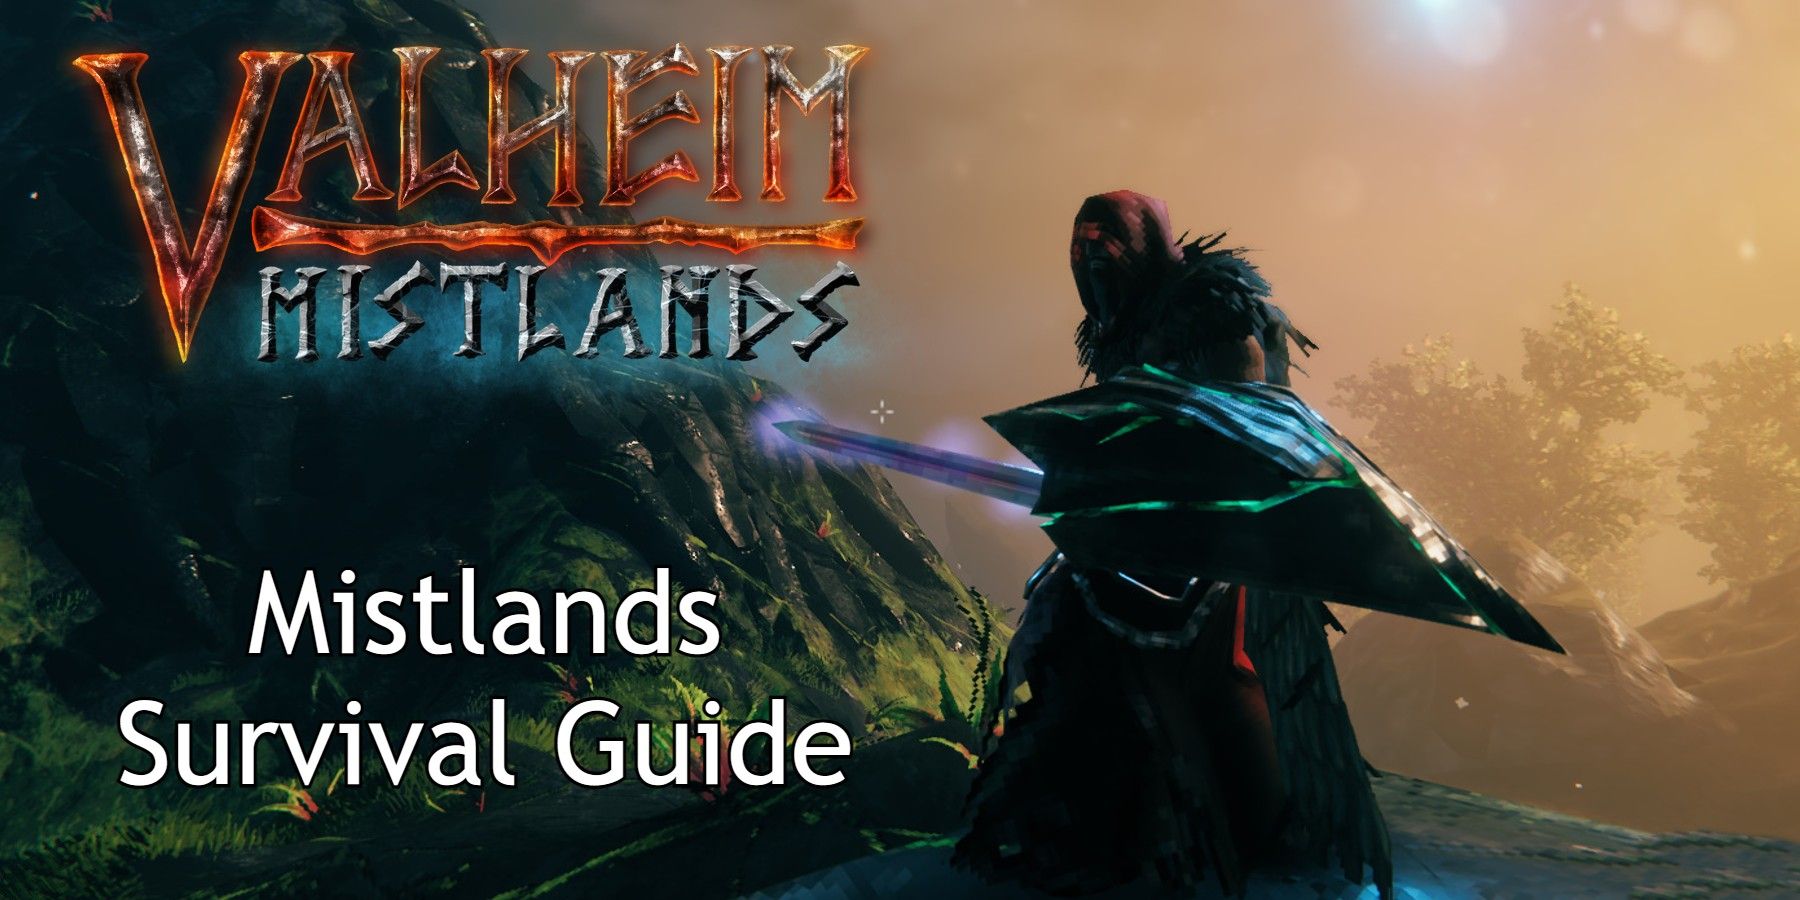 mistlands survival guide and logo